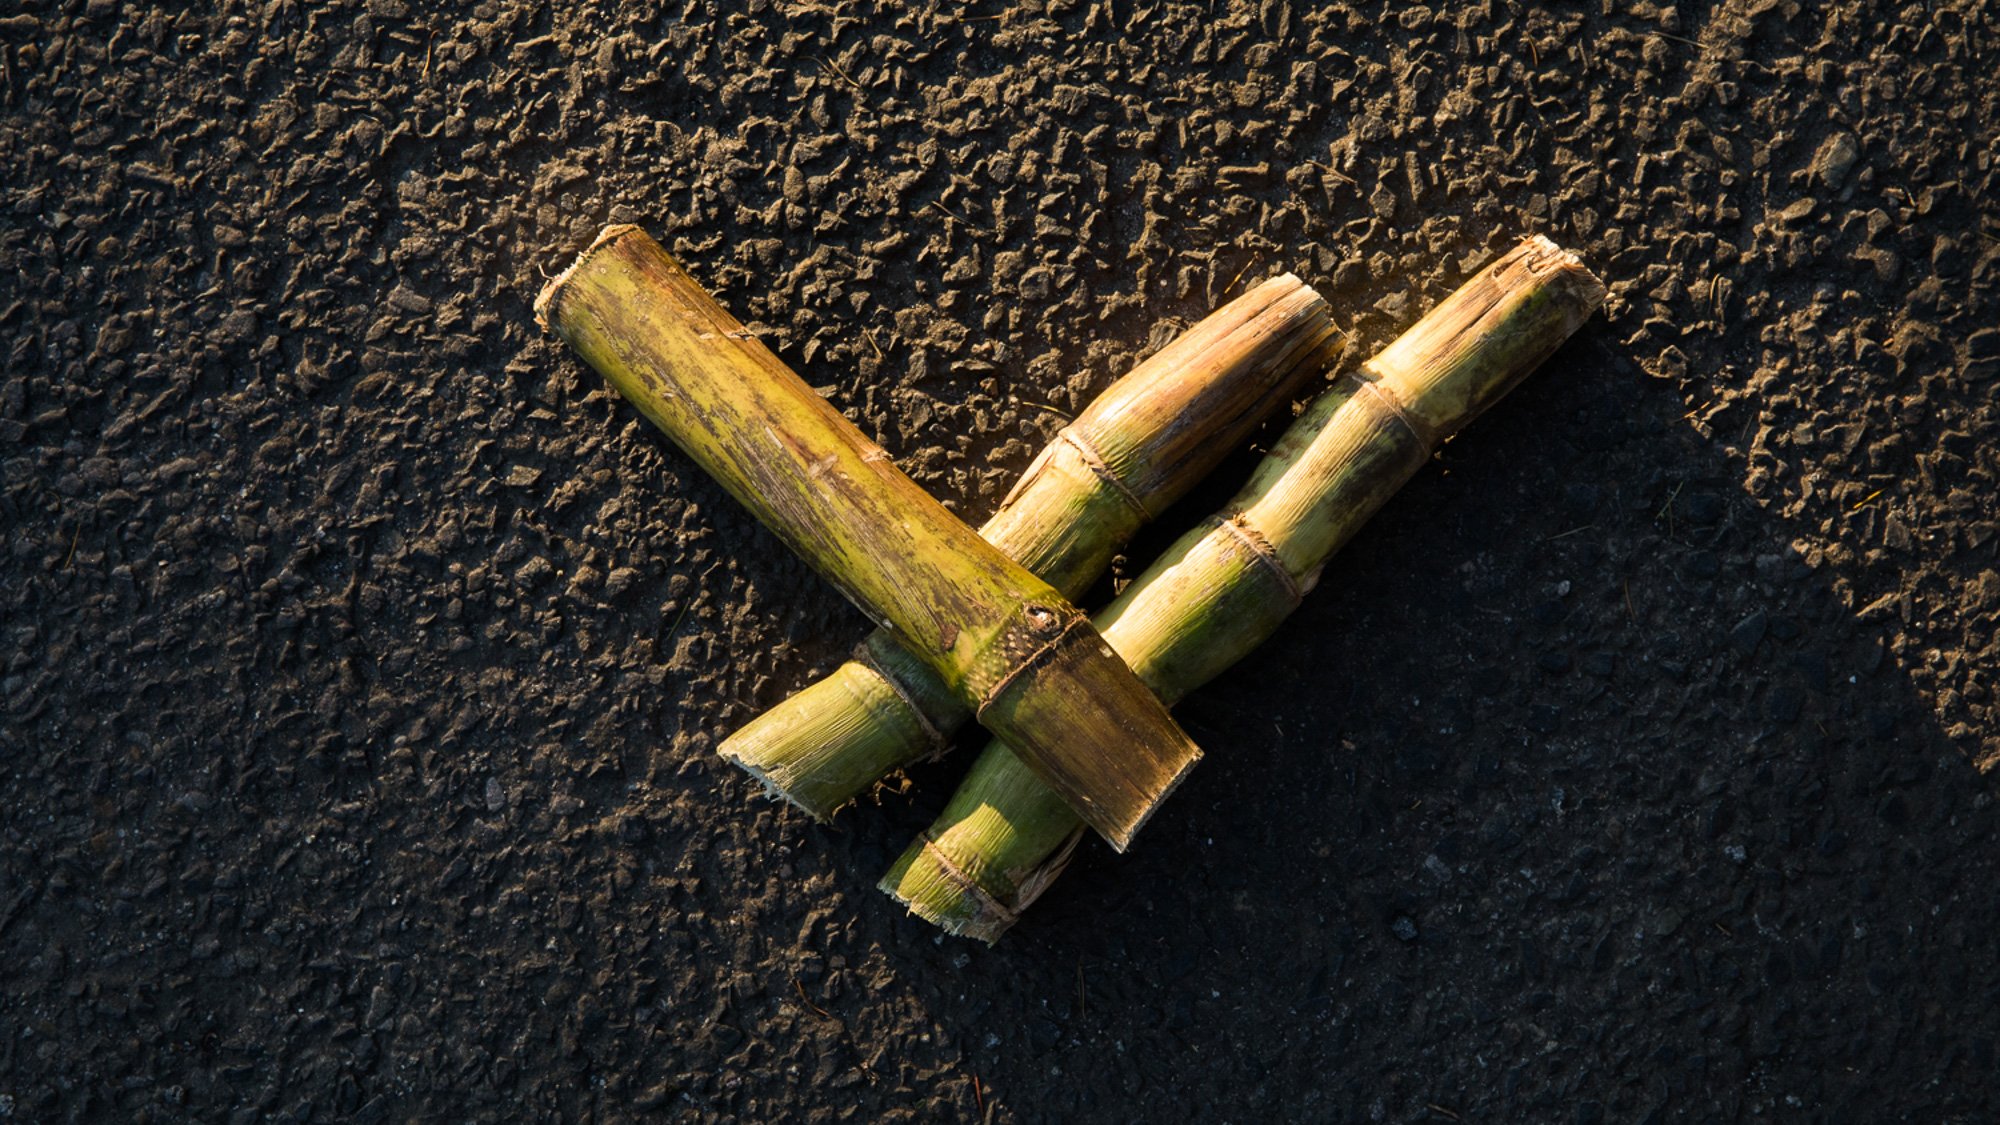 Cut sugarcane on an asphalt surface